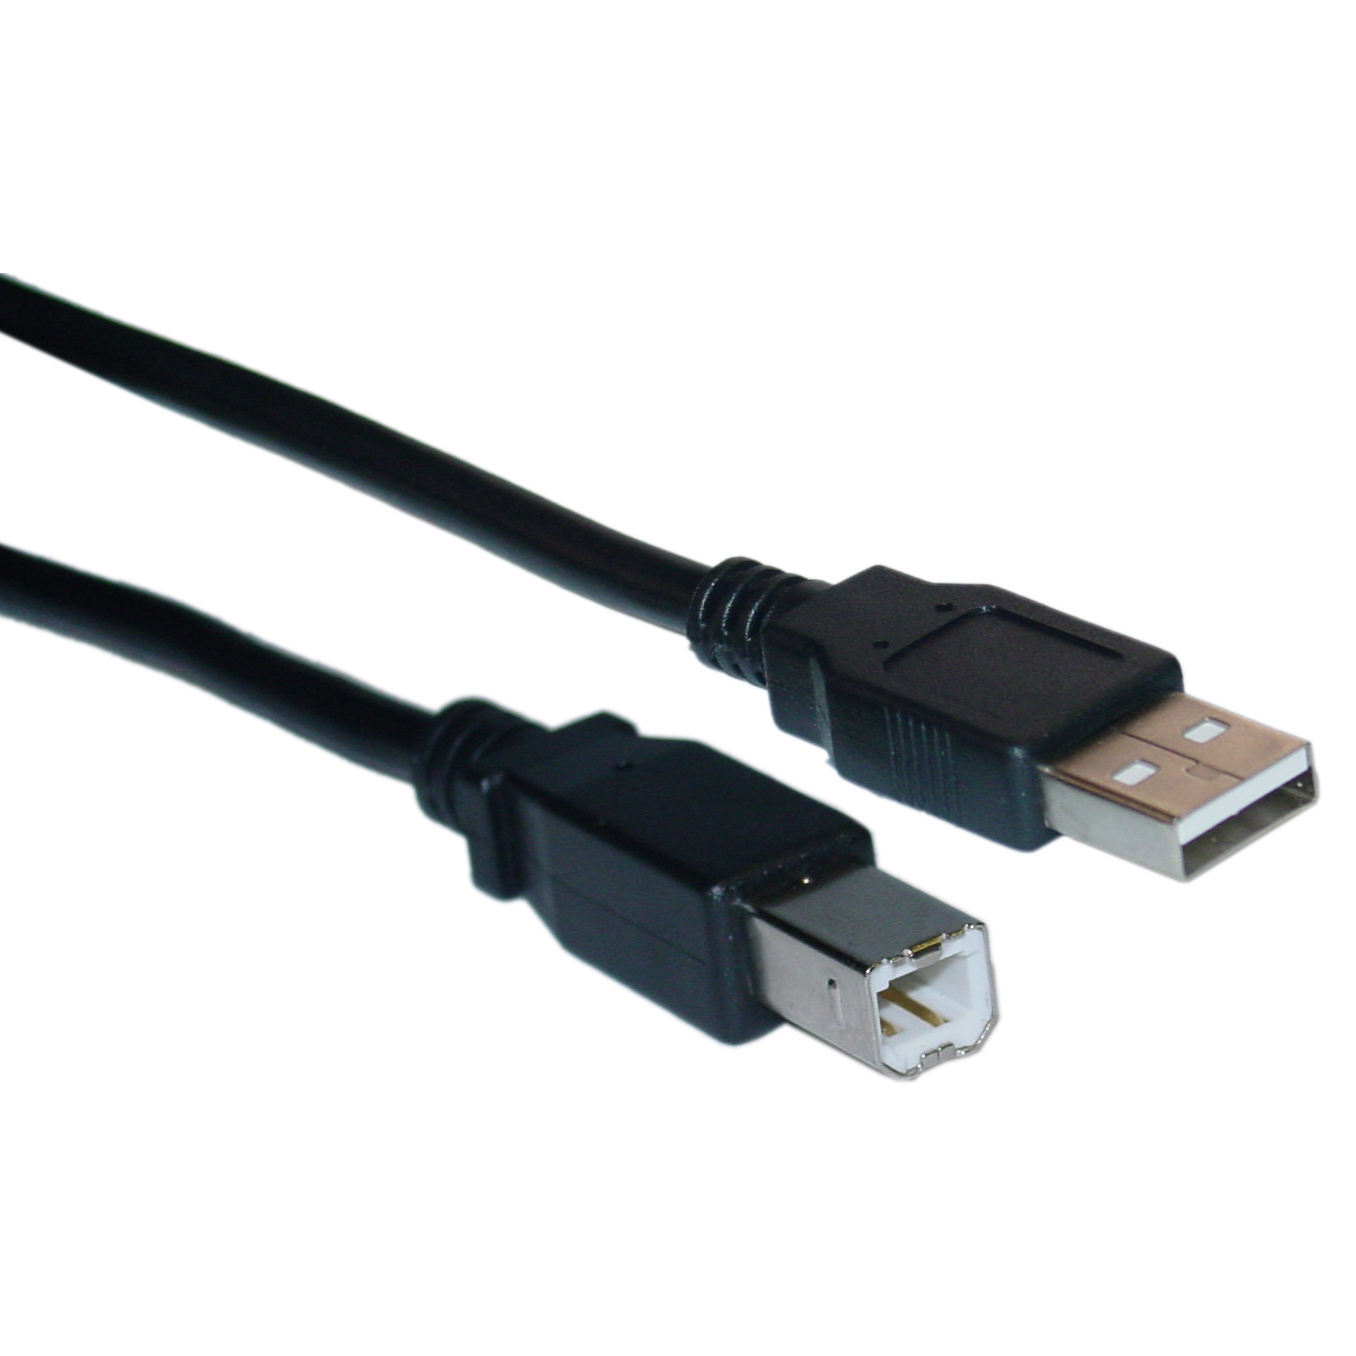 HF-CAB-USB-AB: 1 to 25ft USB 2.0 Printer Cable A to B